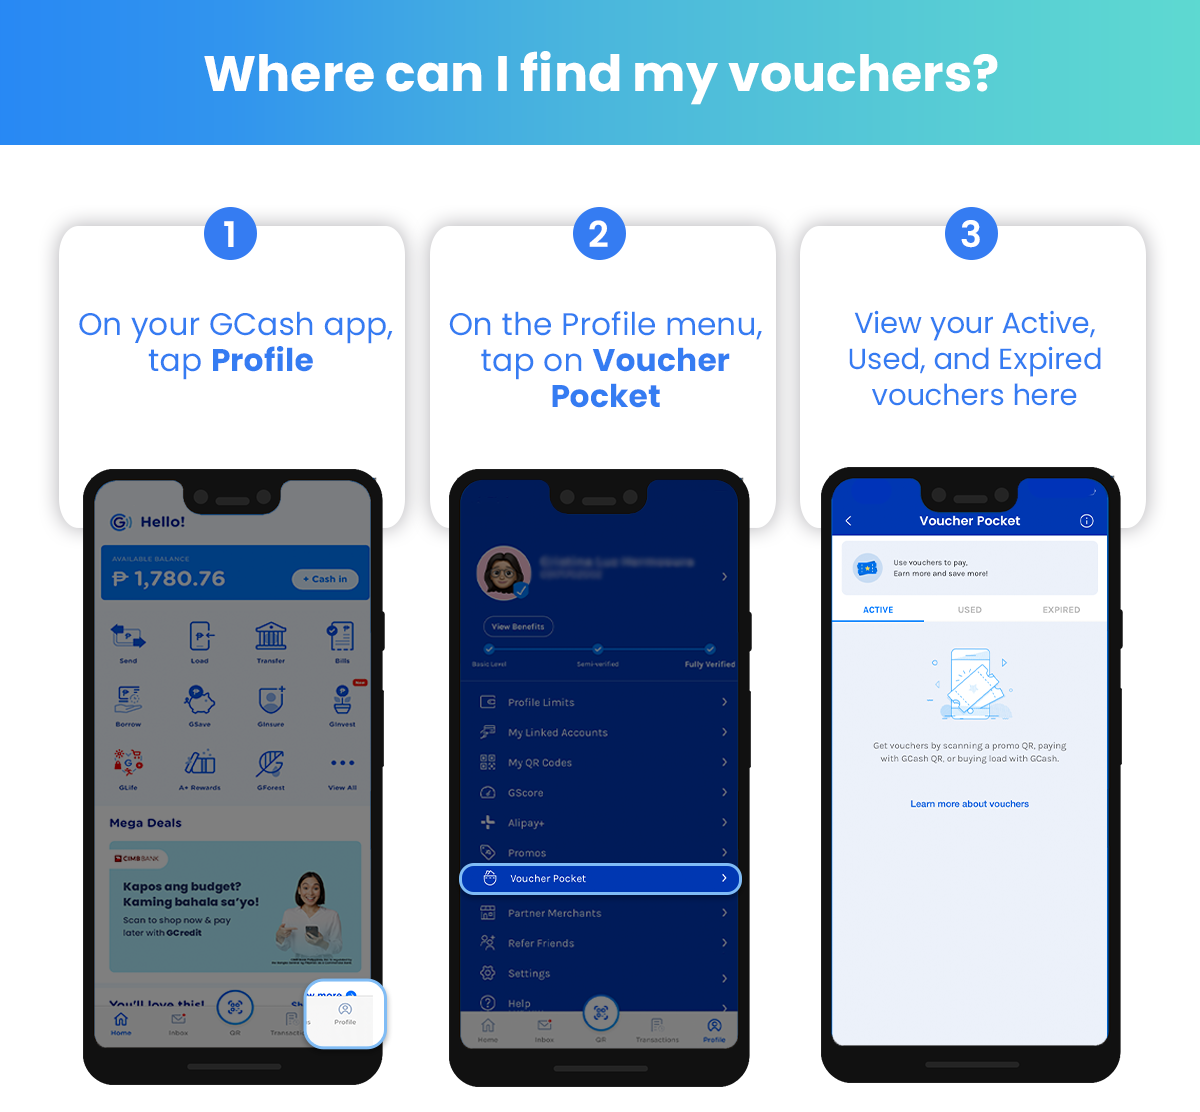 View And Use Vouchers Via Voucher Pocket GCash Help Center